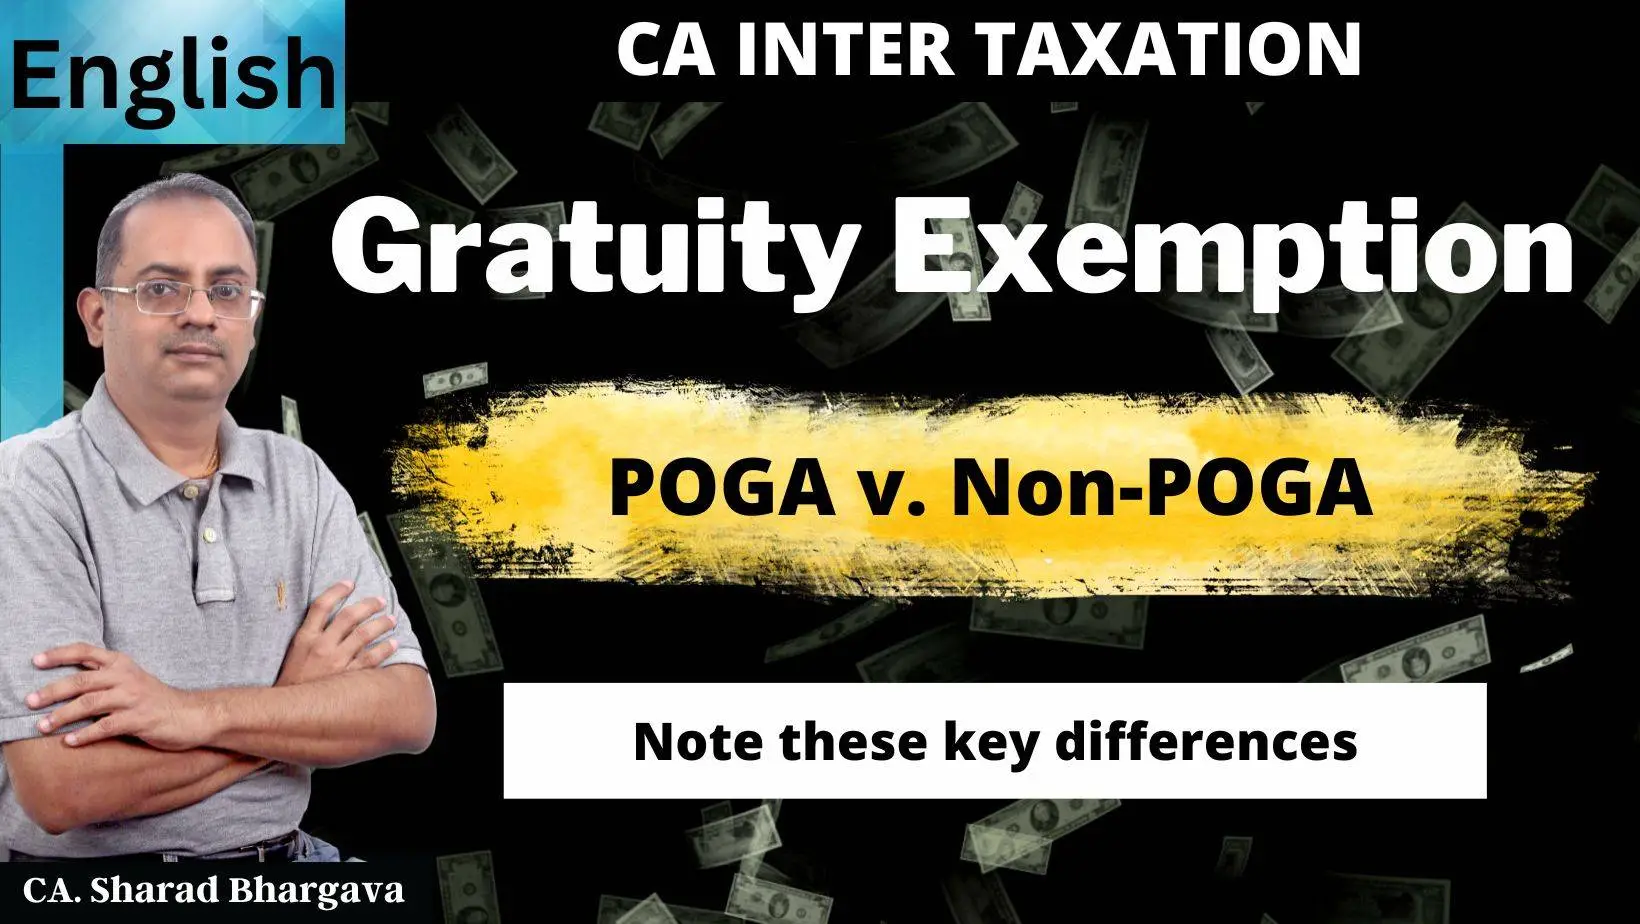 (English) / Note these key differences in POGA v. Non-POGA gratuity exemption / CA. Sharad Bhargava